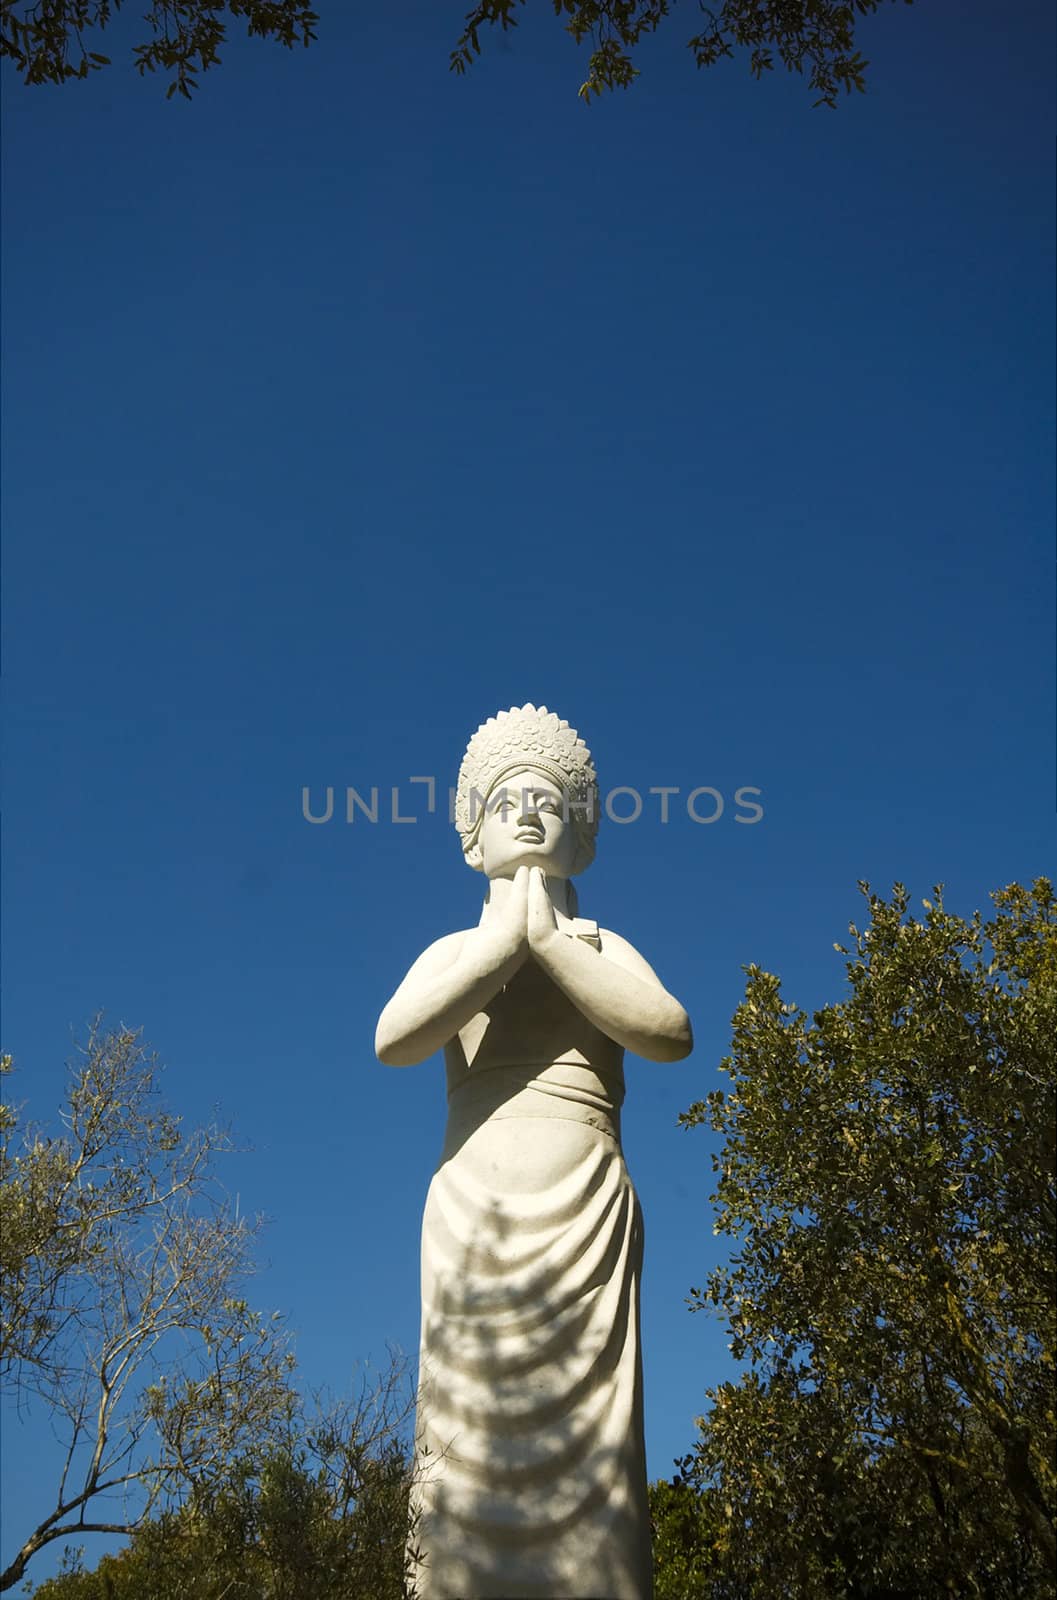 Praying statue by t3mujin